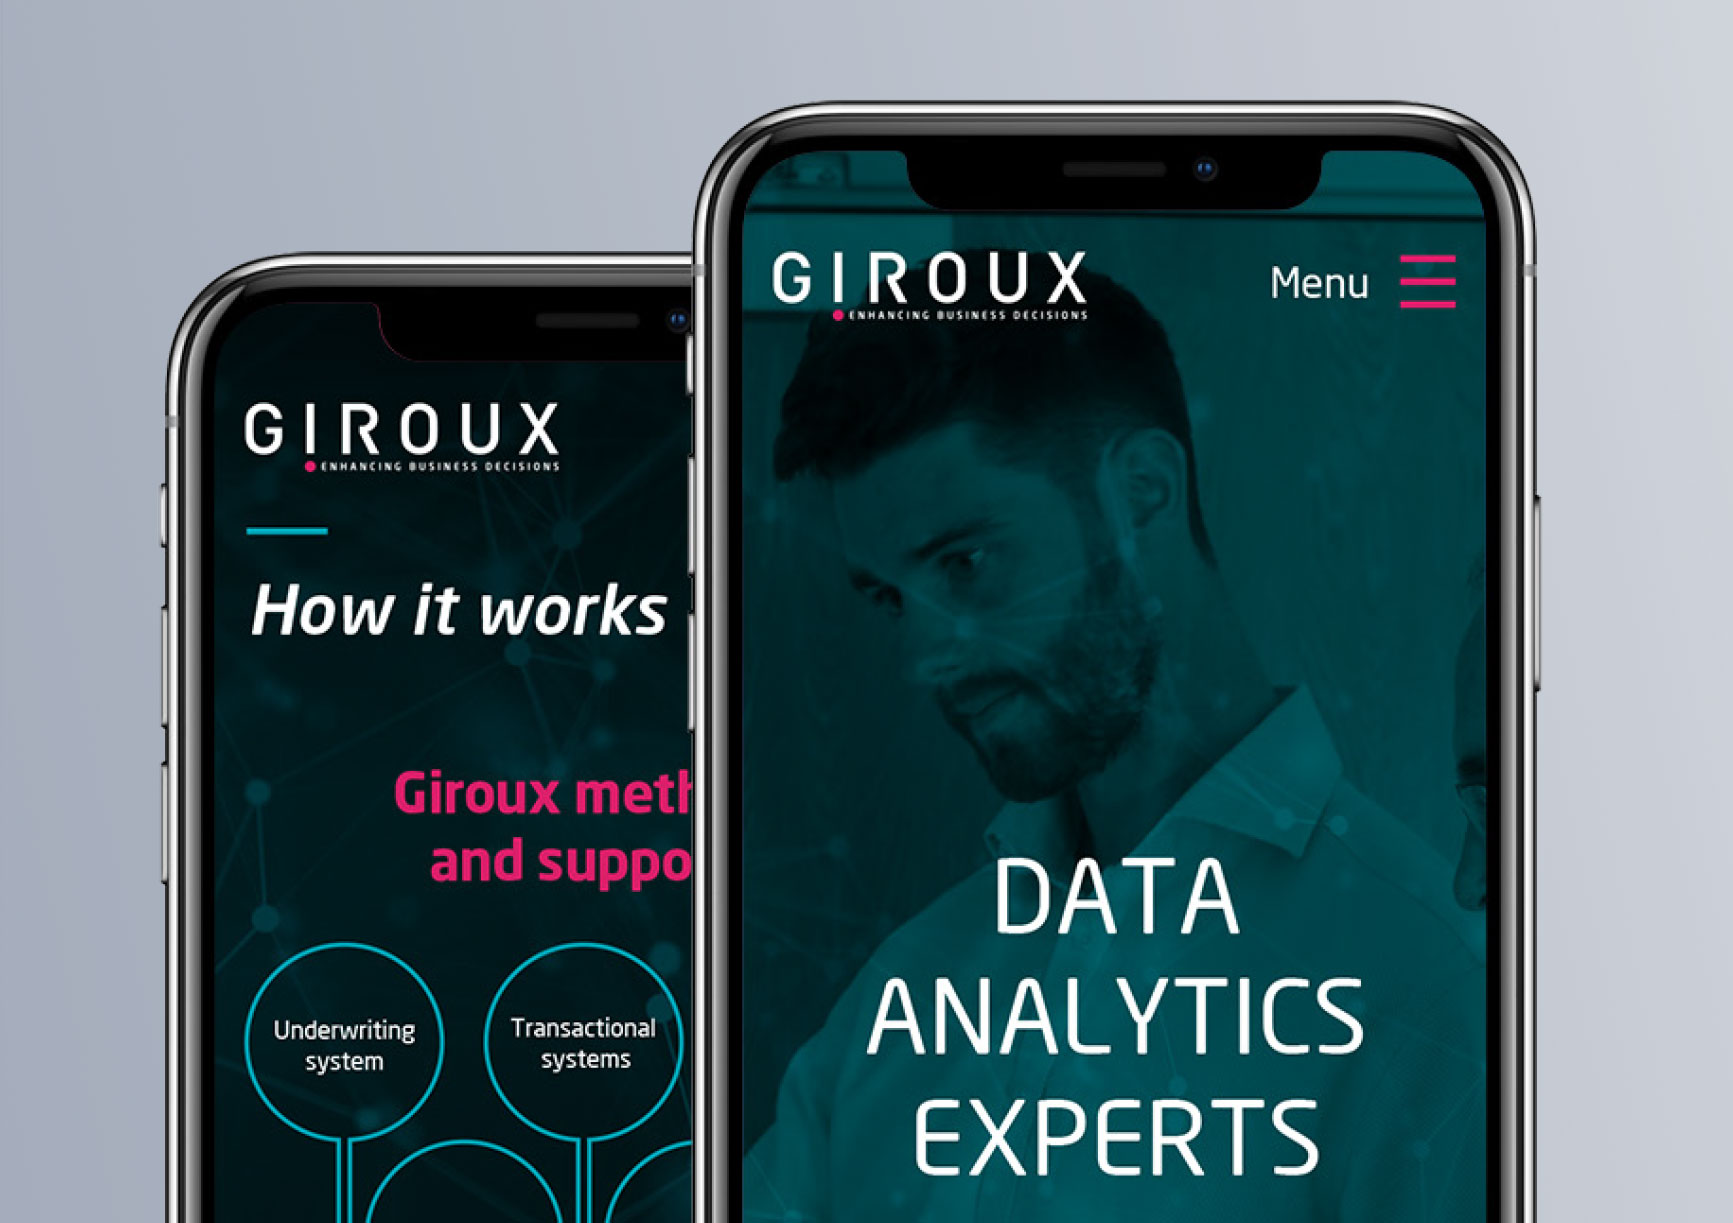 Giroux, responsive website design and development